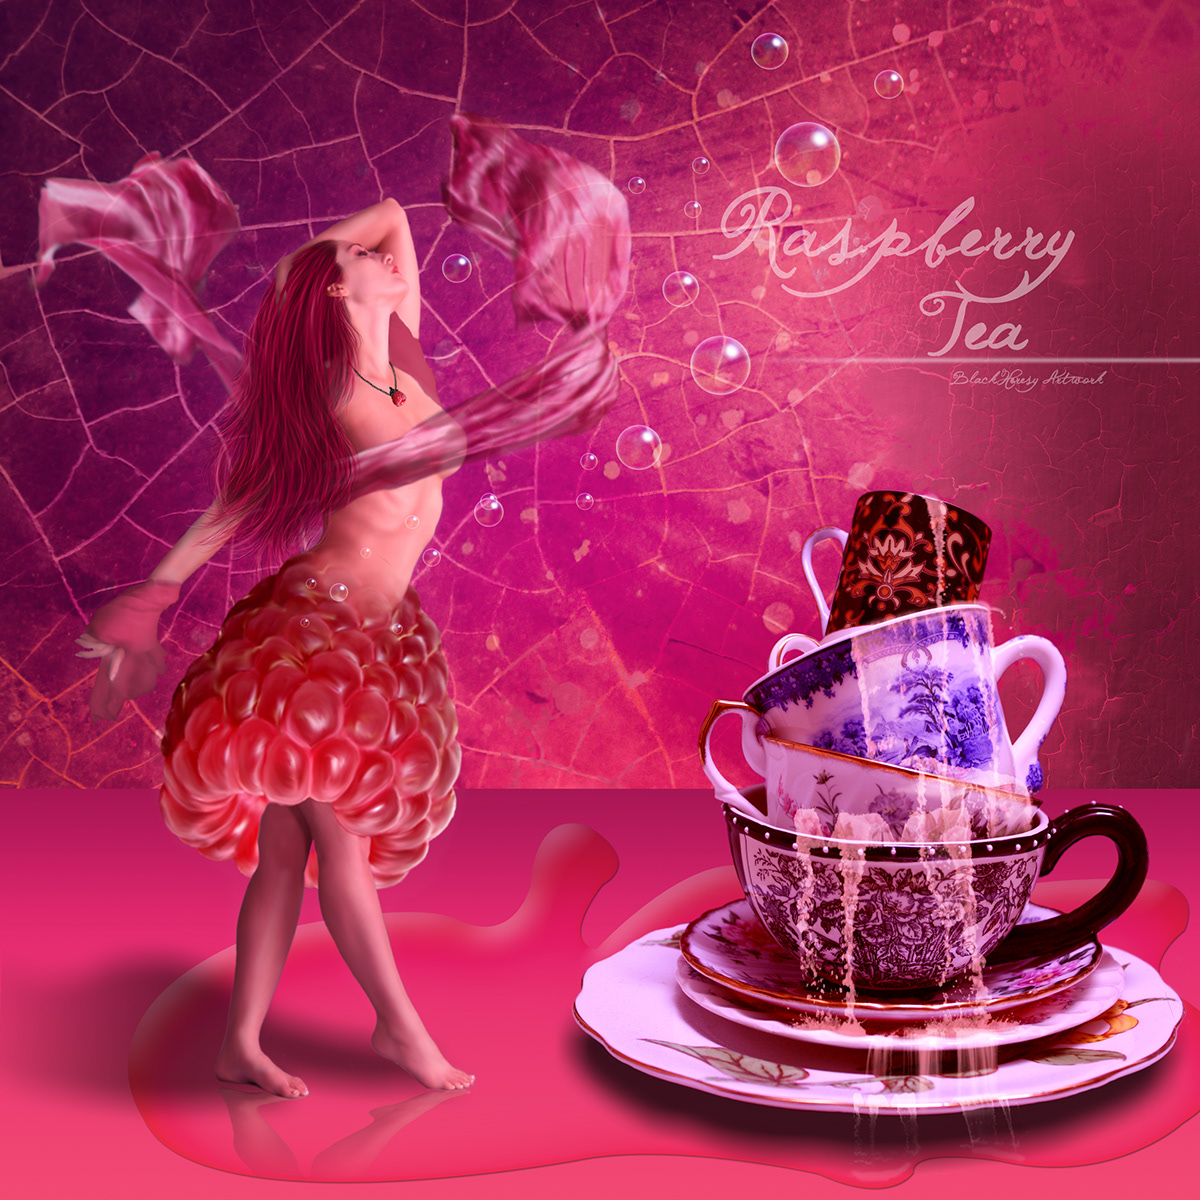 Raspberry tea  photo editing manipulations Creative Director